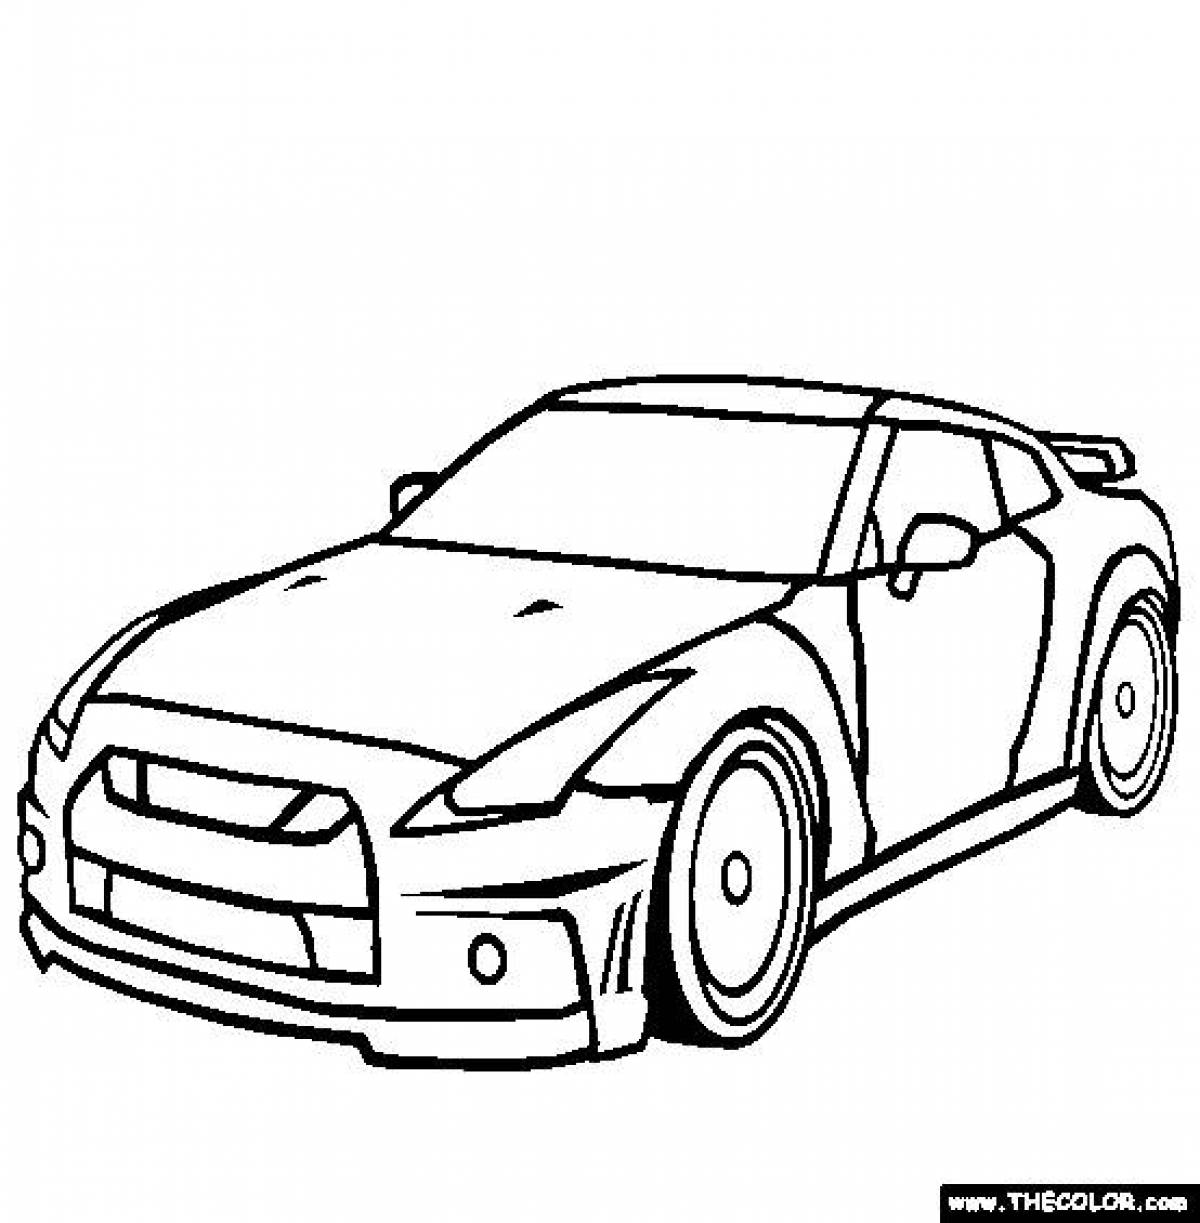 Nissan gtr shiny coloring